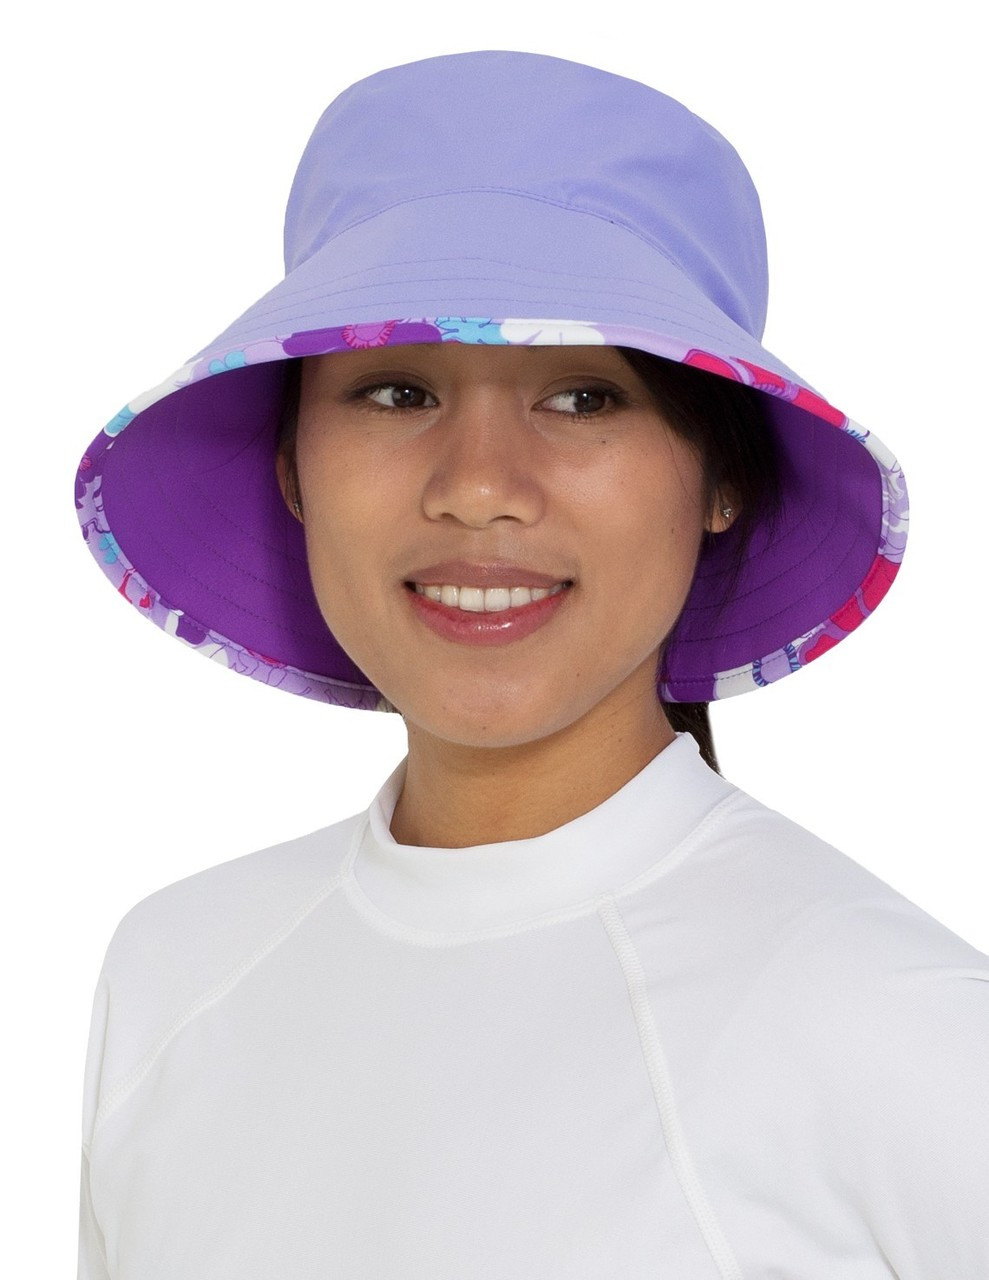 https://cdn11.bigcommerce.com/s-g4ufd5e/images/stencil/1280x1280/products/245/834/womens-tuga-ola-uv-bucket-hat-daisy-purple__95251.1519467493.jpg?c=2